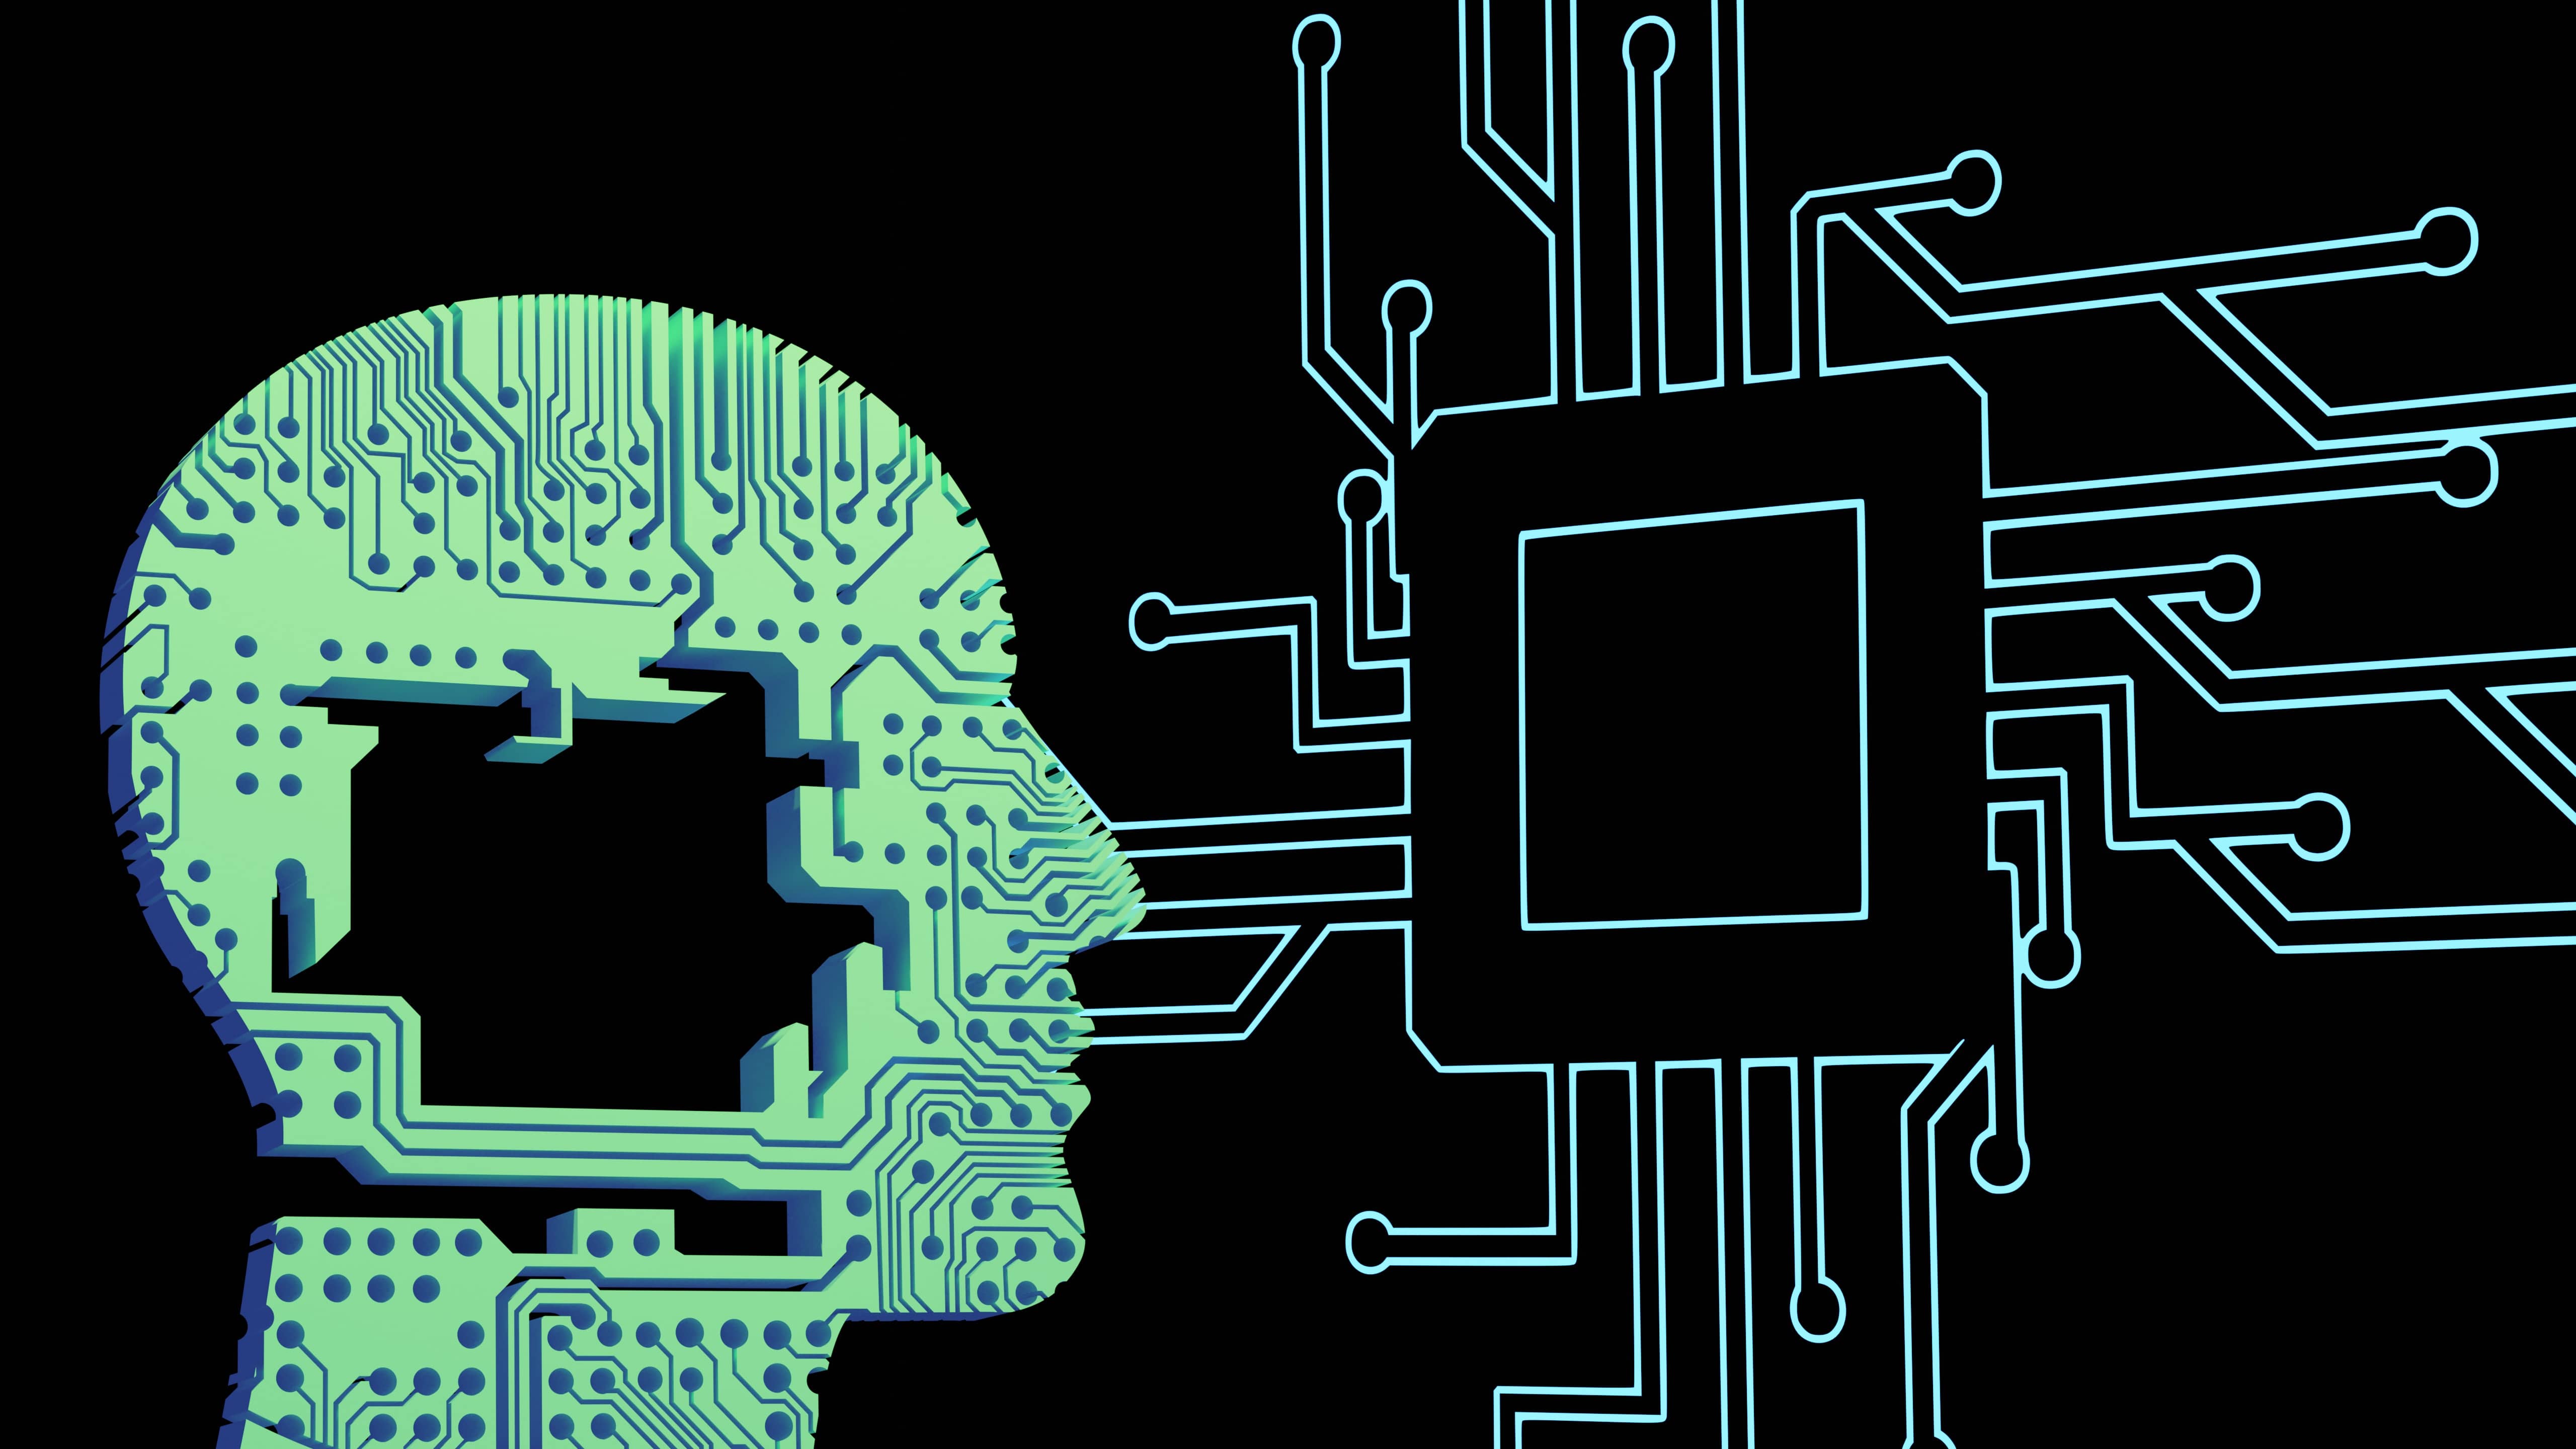 Digital art representing AI; showing computer circuitry while resembling the human brain.